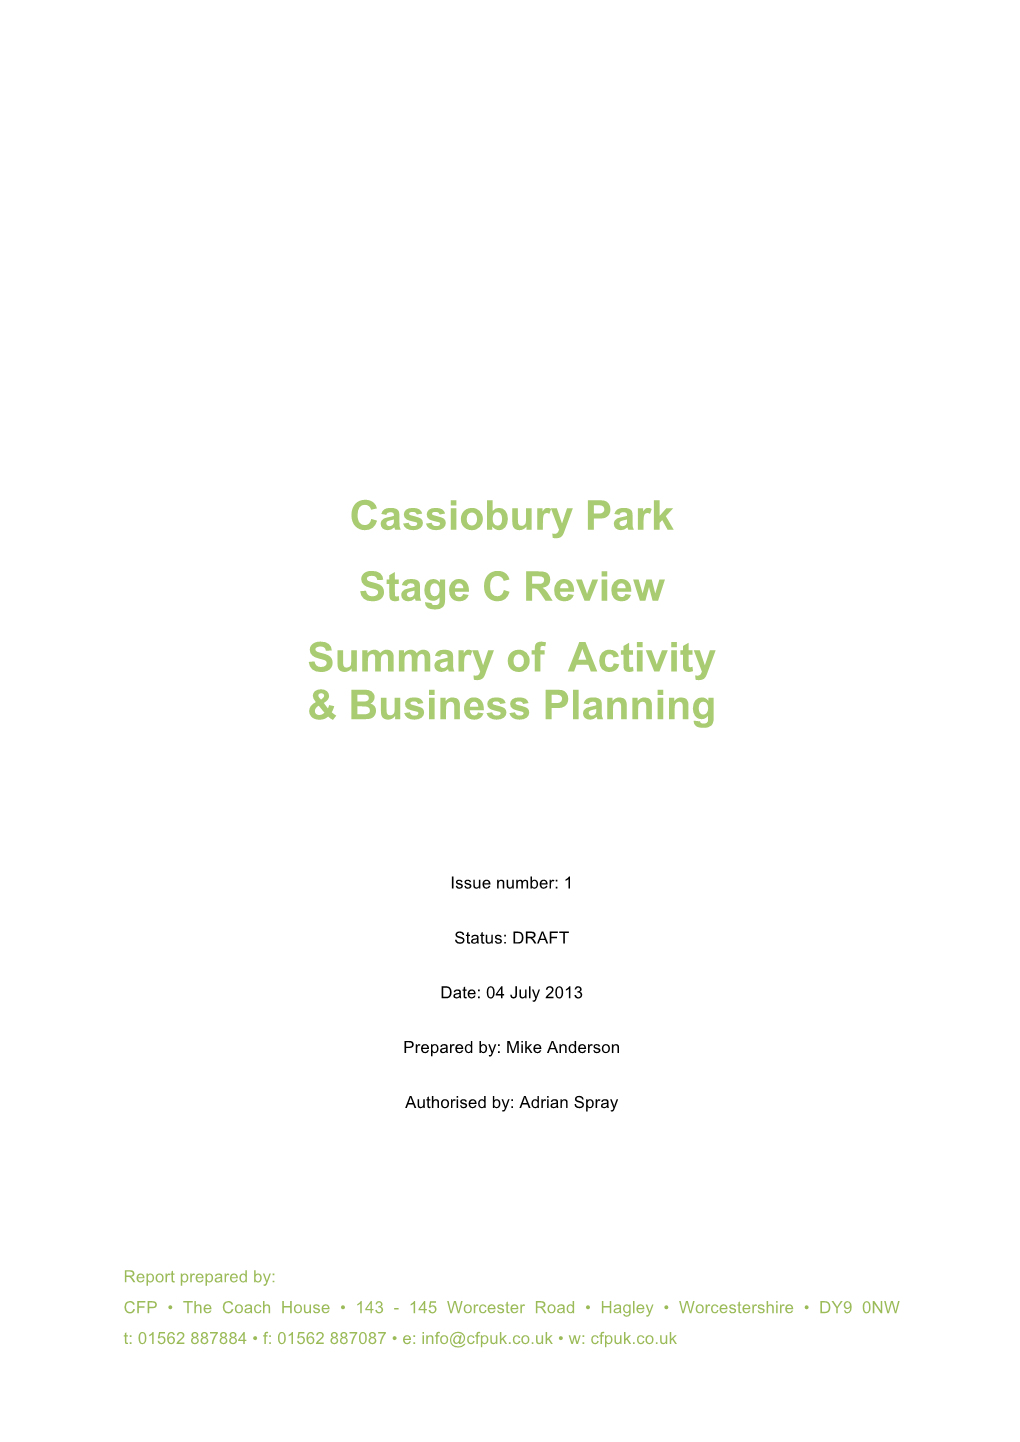 Cassiobury Park Summary of Activity and Business Planning V1